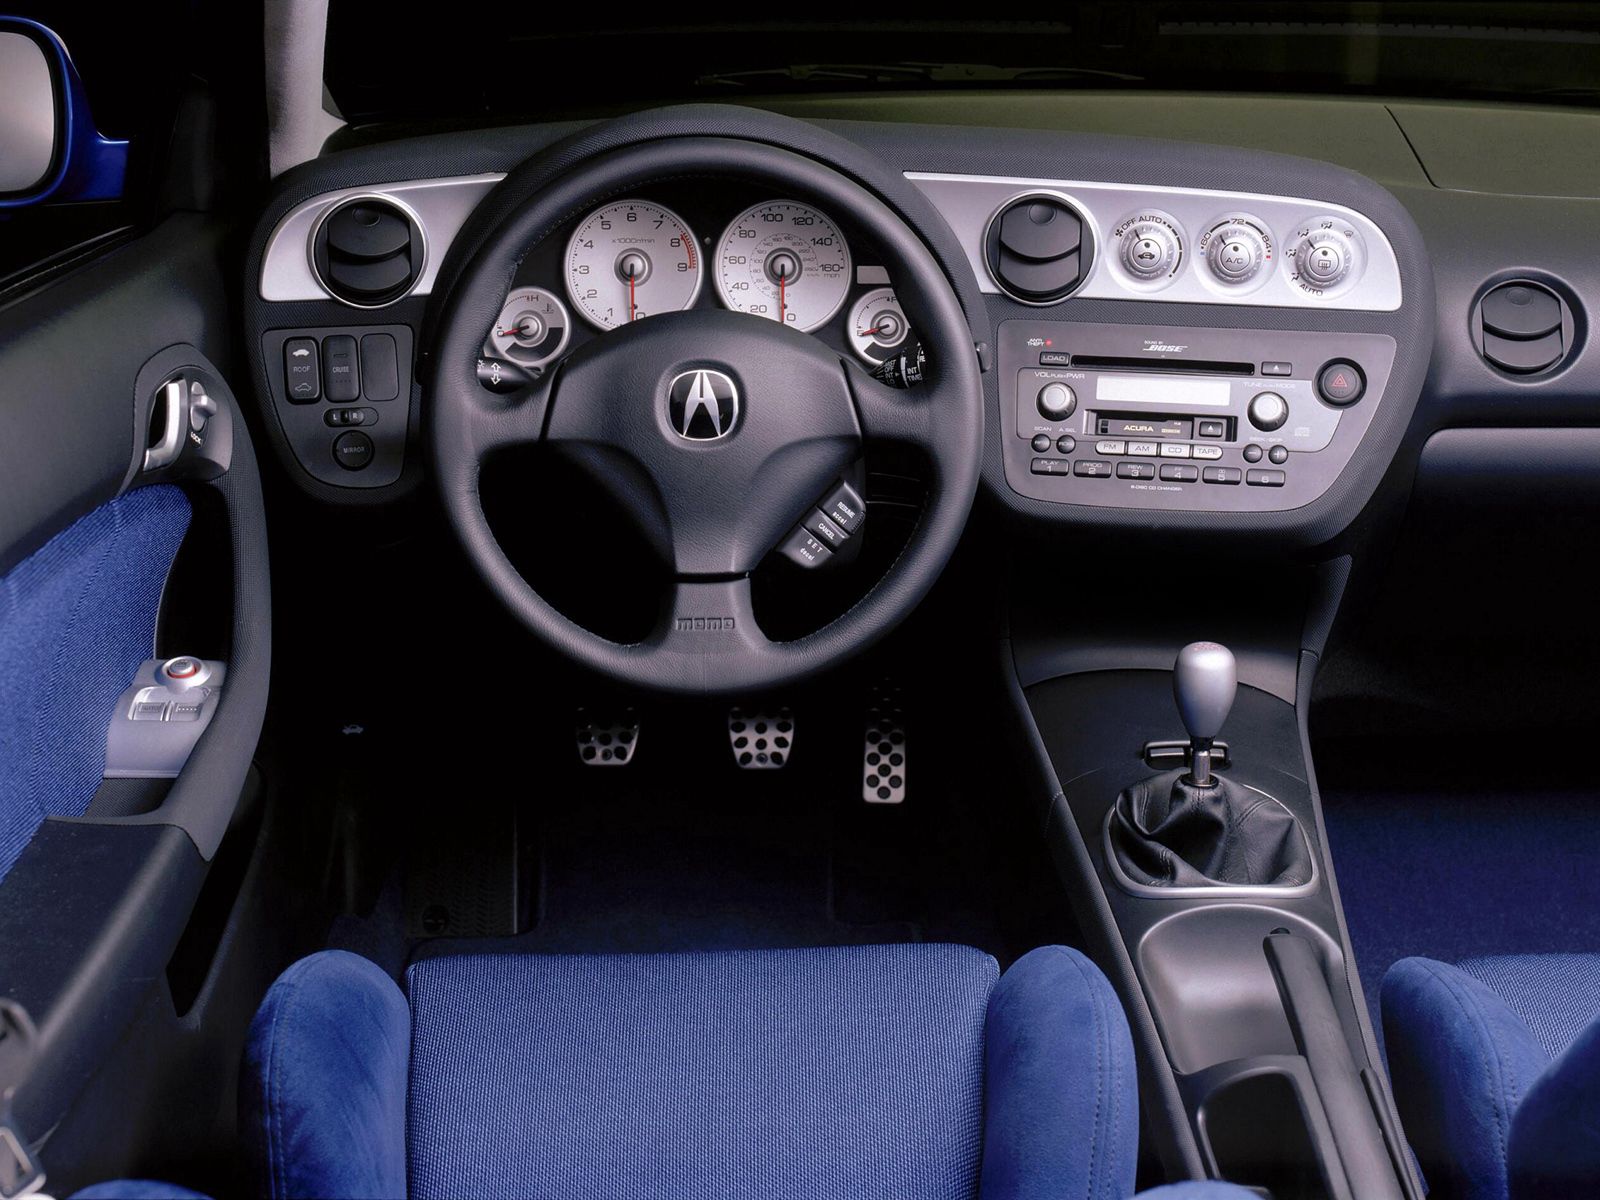 rudder, acura, interior, cars, concept, steering wheel, salon, speedometer, 2001, rs x